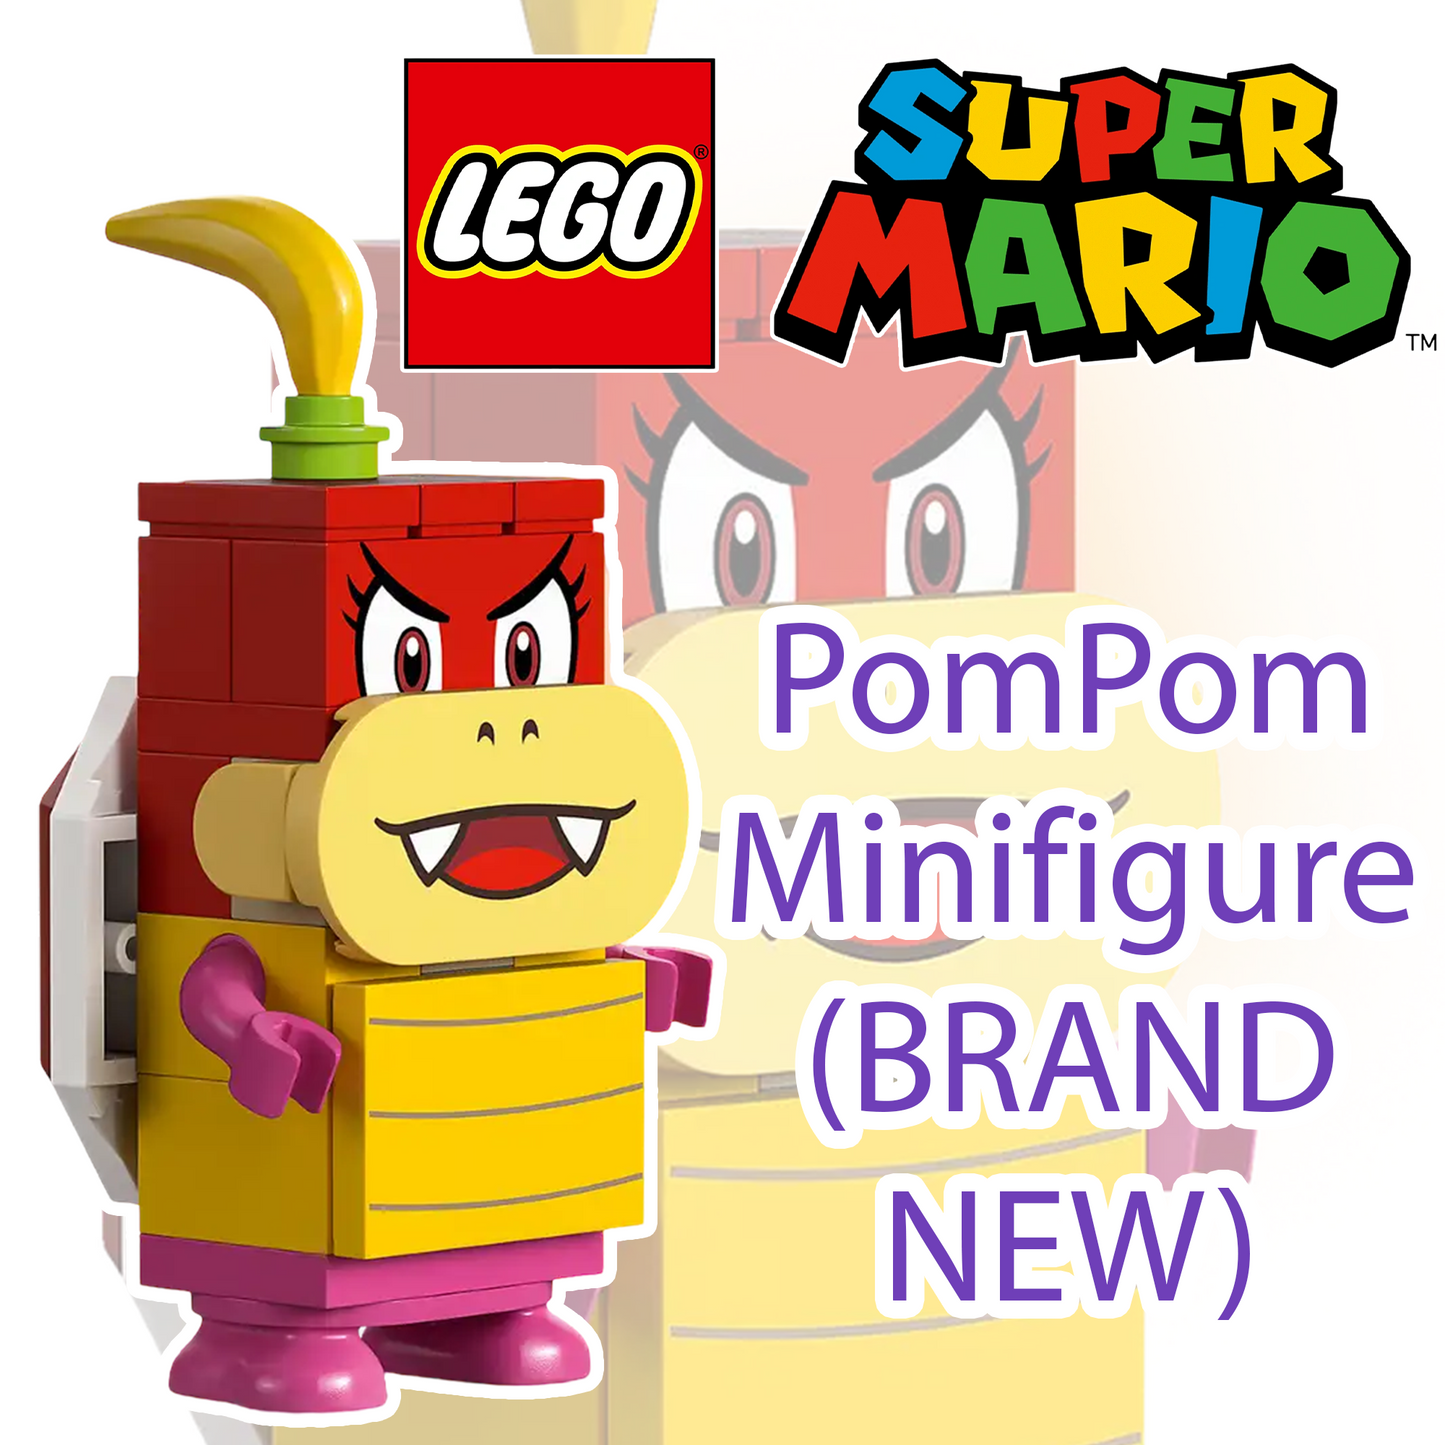 POM POM Minifigure (LEGO Super Mario) BRAND NEW Unsealed - RARE (From #71419)